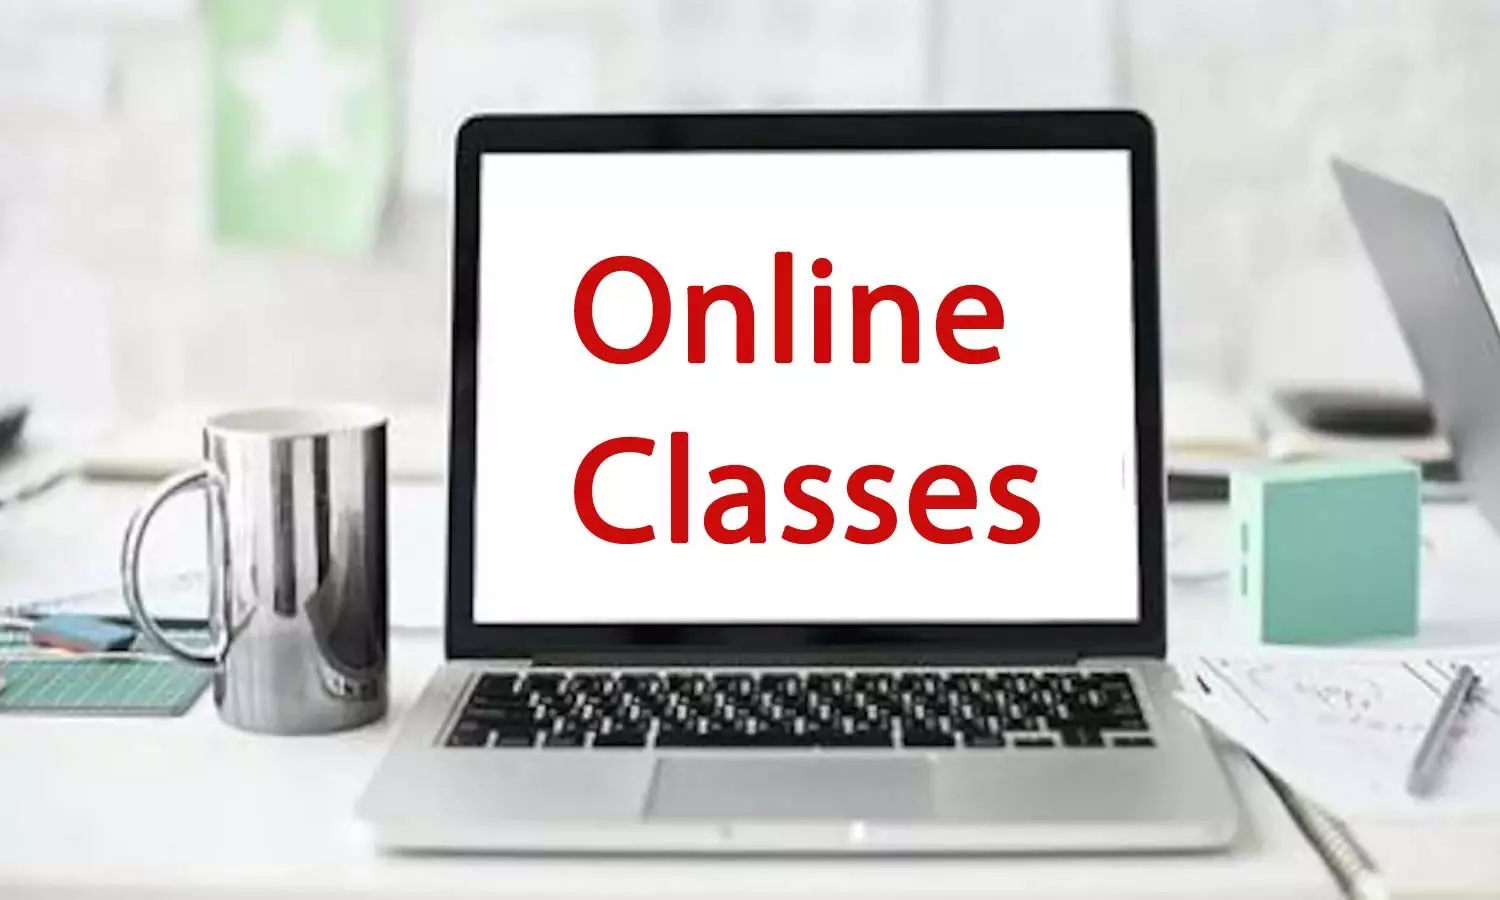 Online Classes: నేటి నుండి విధ్యార్థులకు ఆన్లైన్ క్లాసులు నిర్వహించాలని విద్యా శాఖ ఆదేశాలు